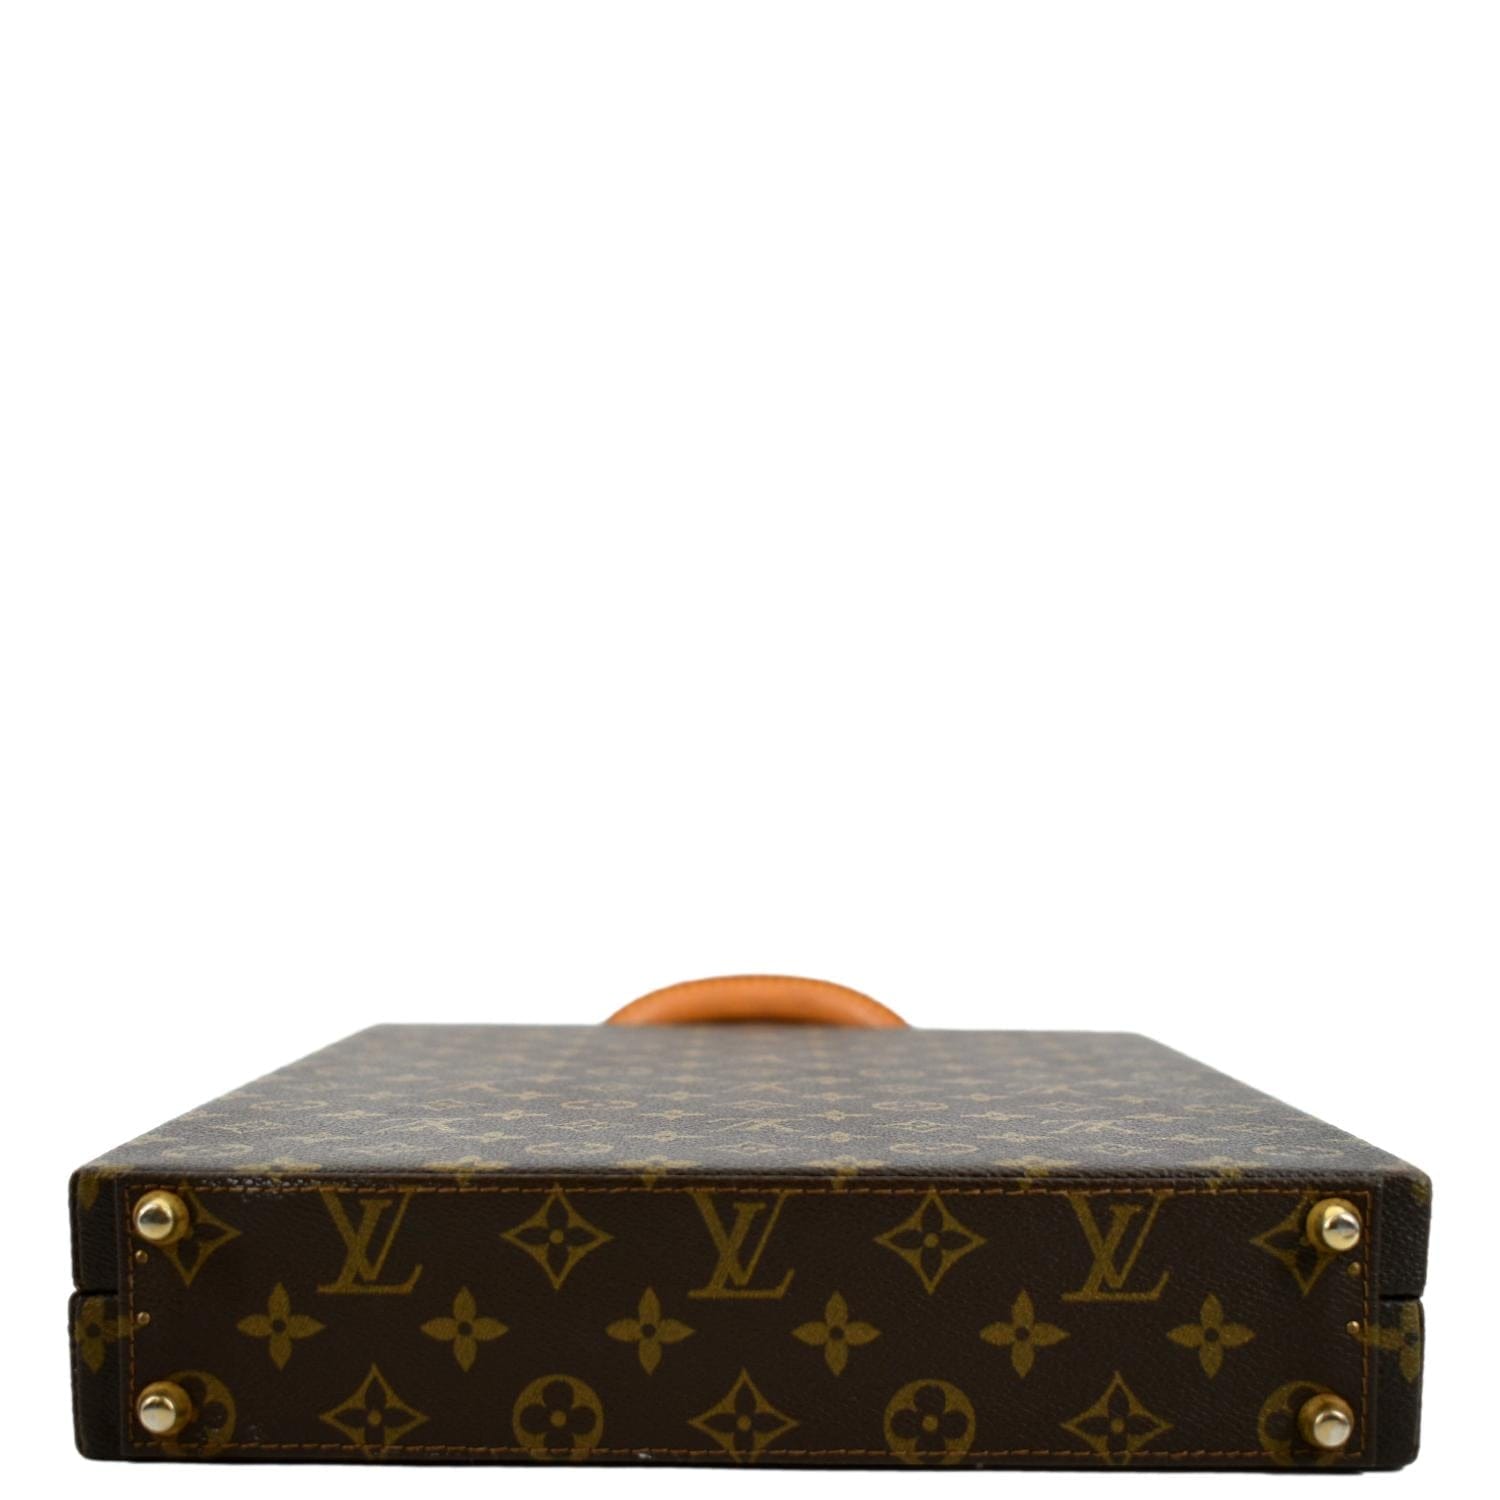 Louis Vuitton Monogram President Briefcase, Handbags and Accessories  Online, Ecommerce Retail